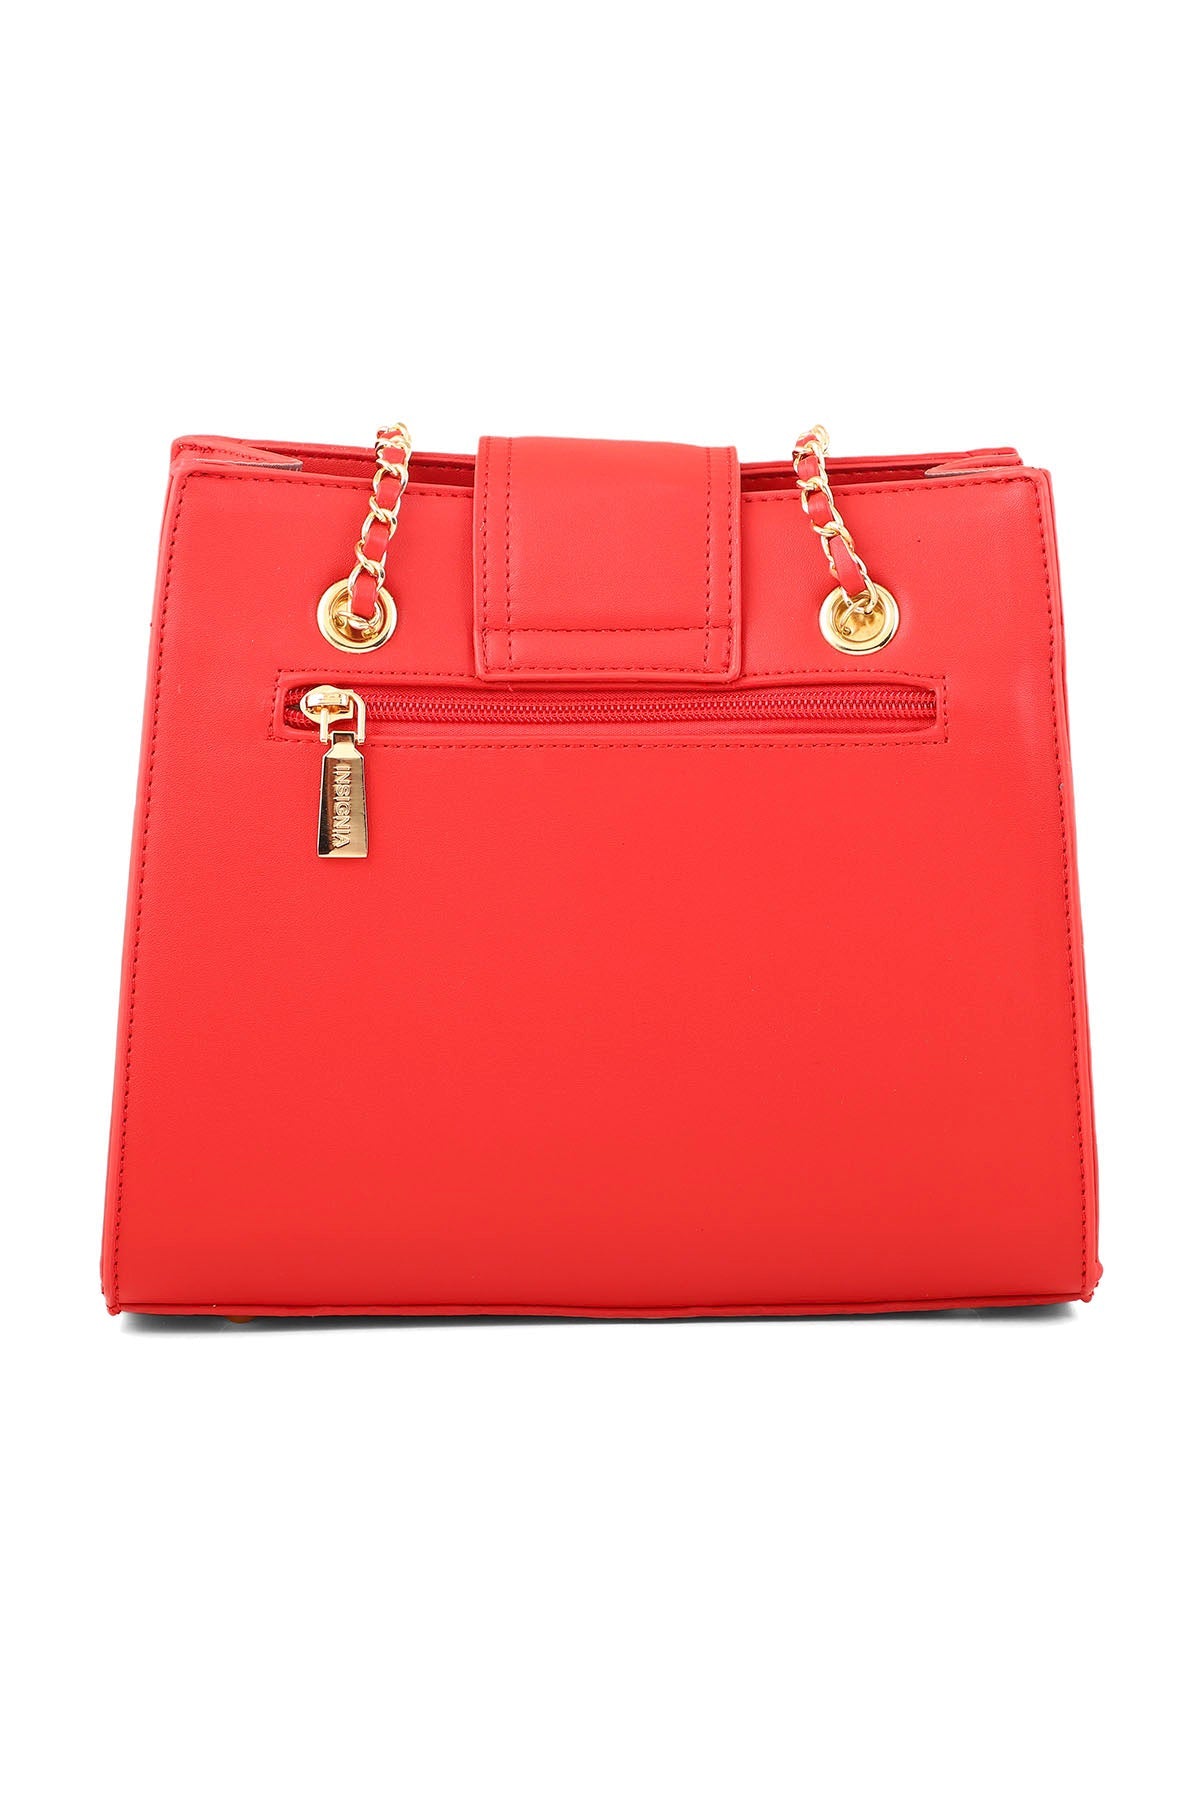 Baguette Shoulder Bags B15127-Red